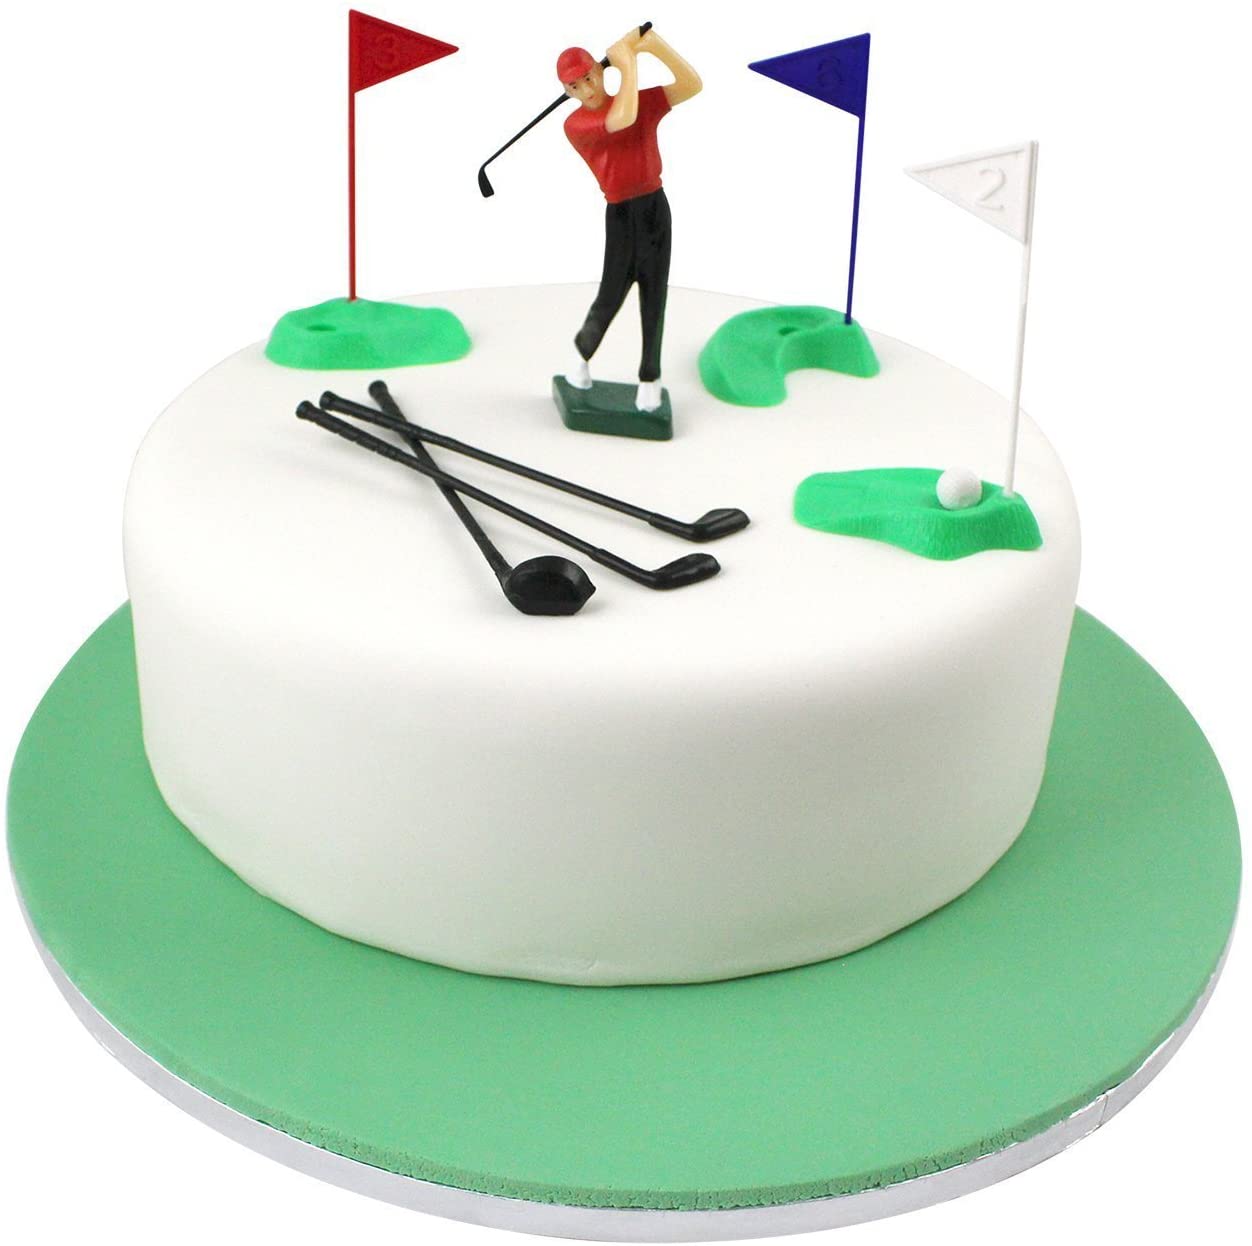 Golf Set Cake Topper